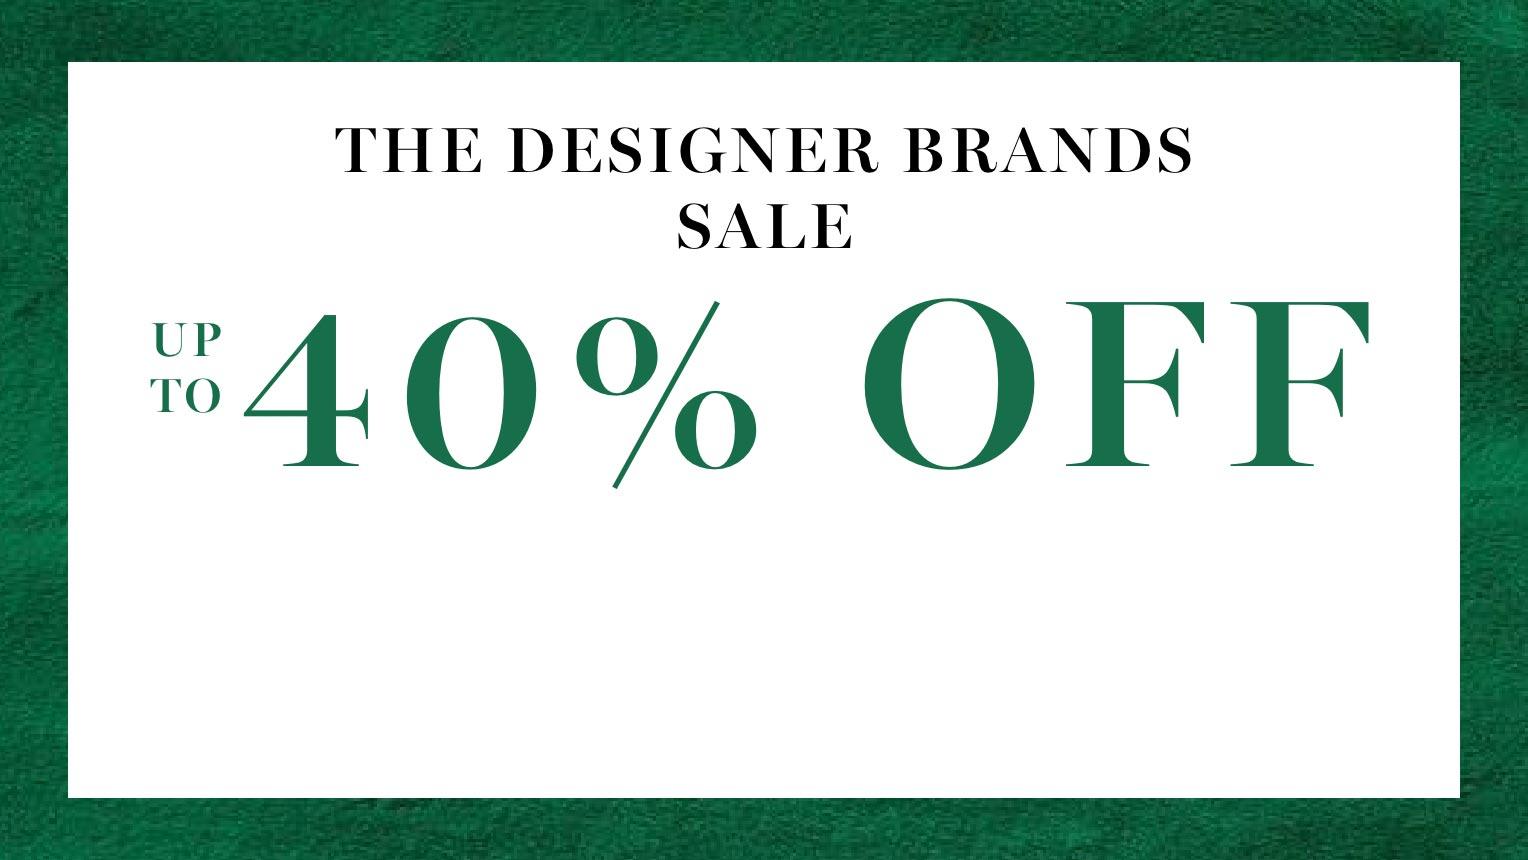 Up to 40% off selected Designer Brands